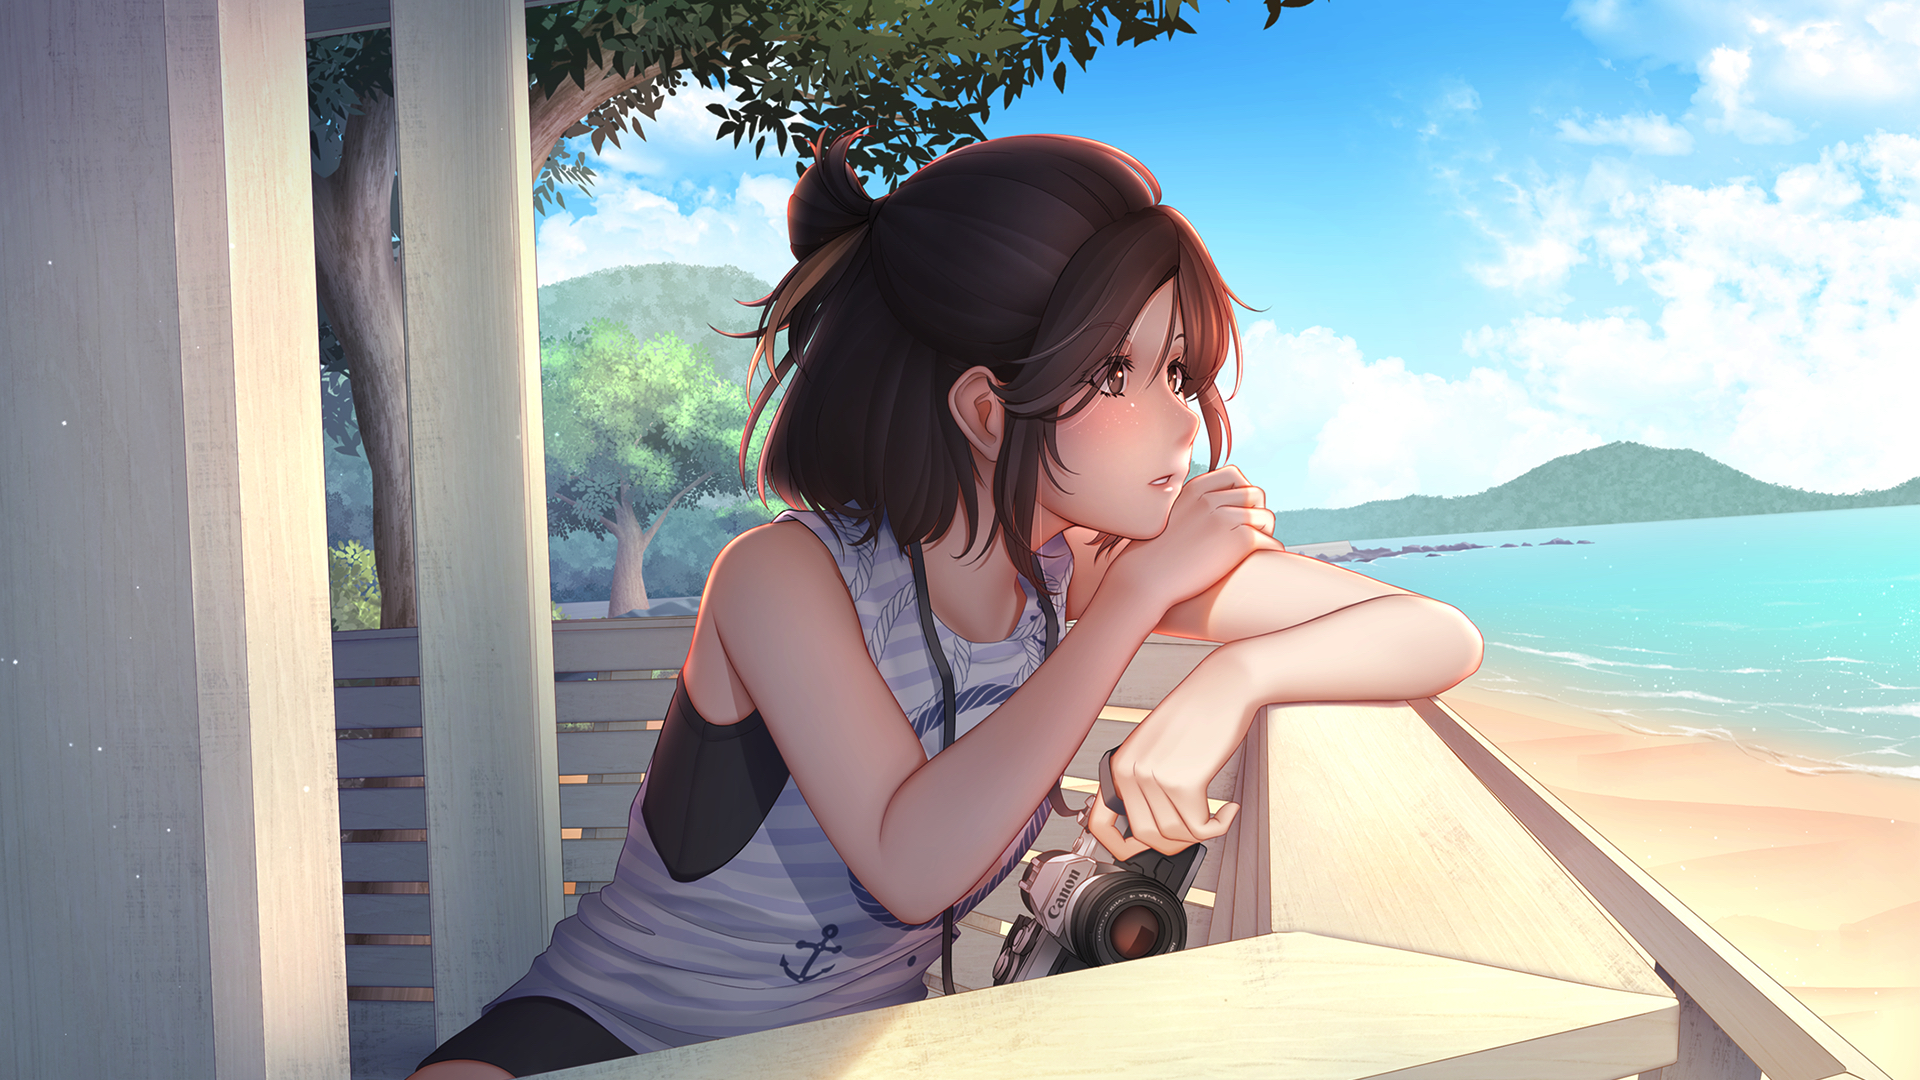 Desktop Wallpaper Original, Anime Girl, Summer, Beach, Hd Image, Picture,  Background, 7zpigb